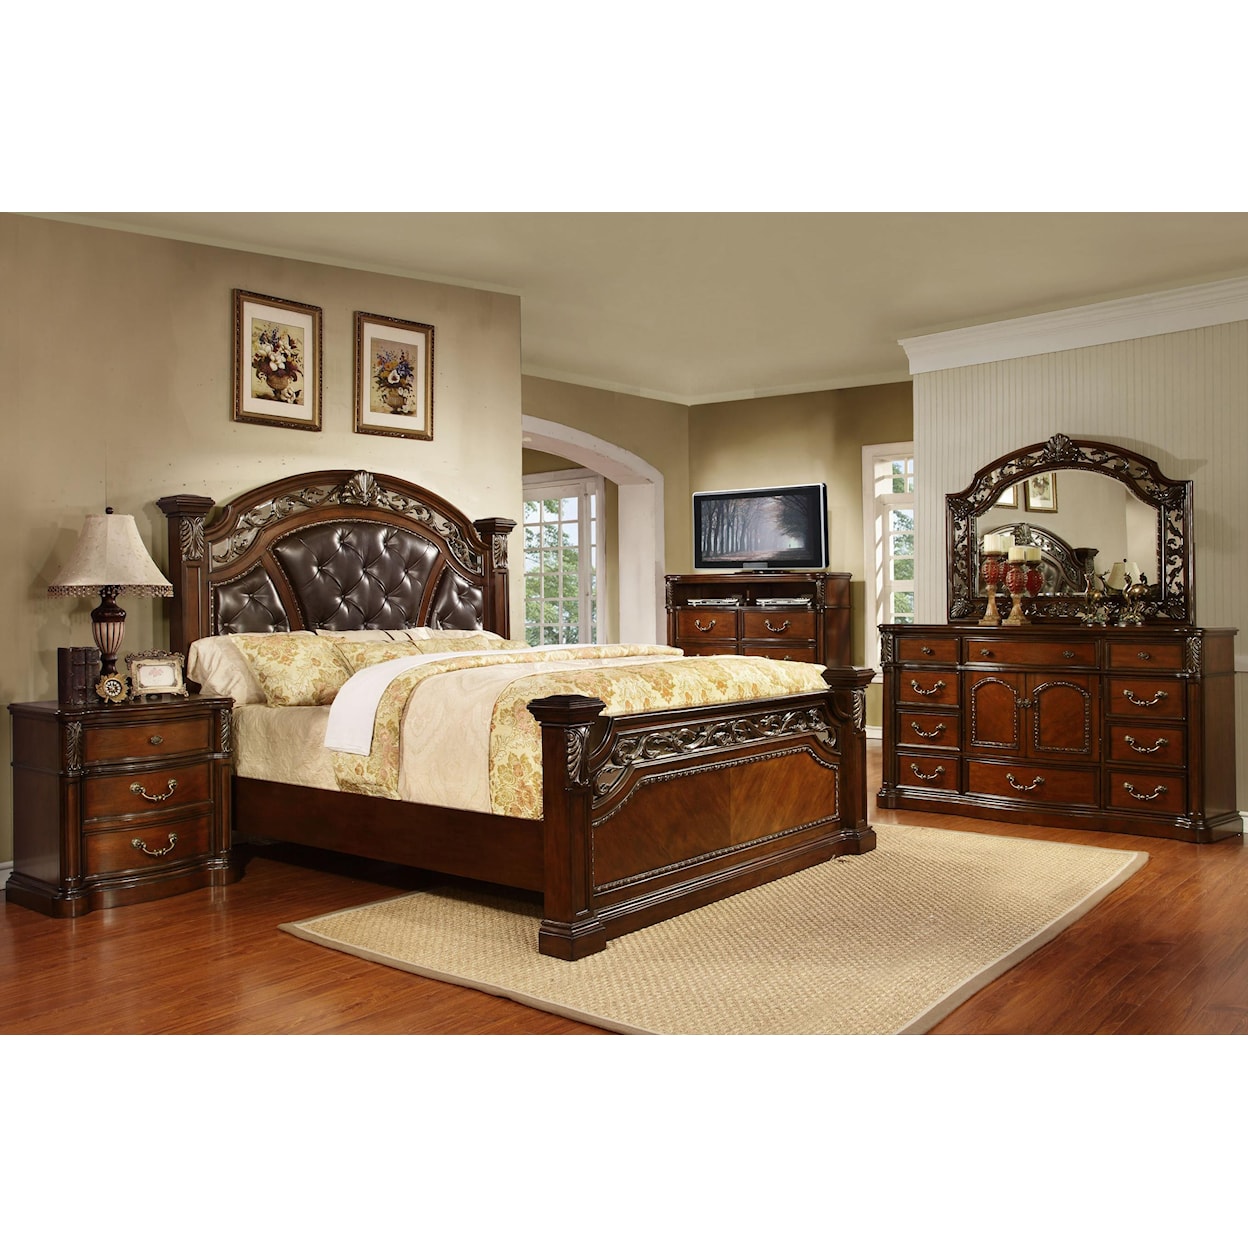 Avalon Furniture Vistoso King Bedroom Group